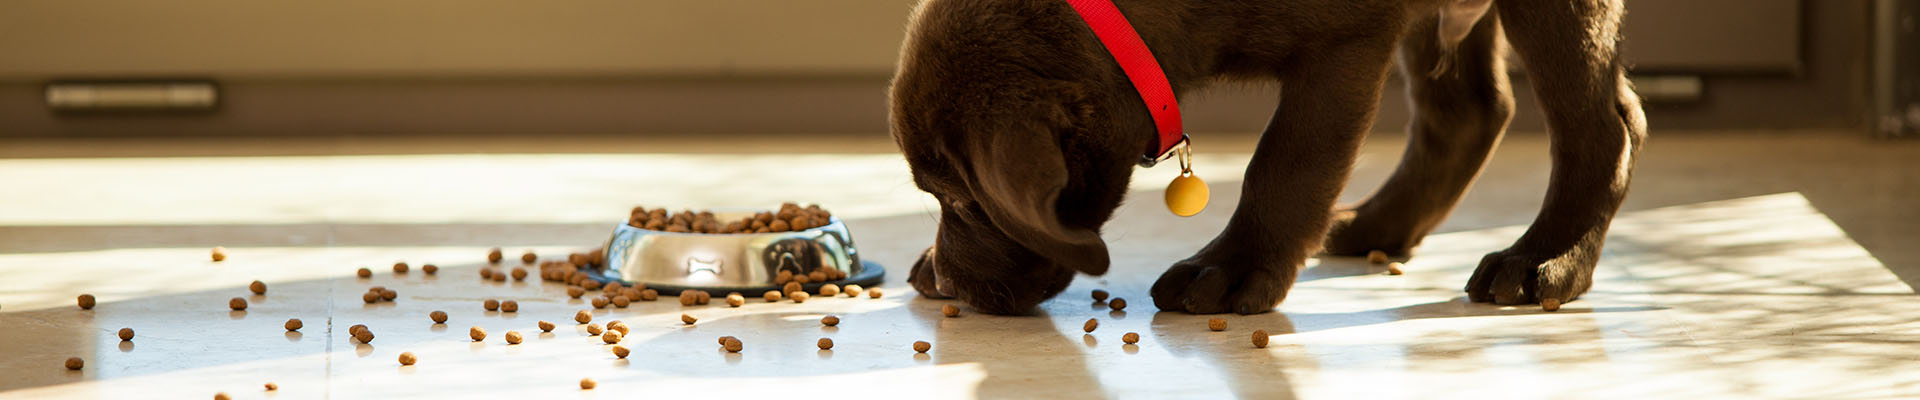 cachorro que come alimento extruido para perro